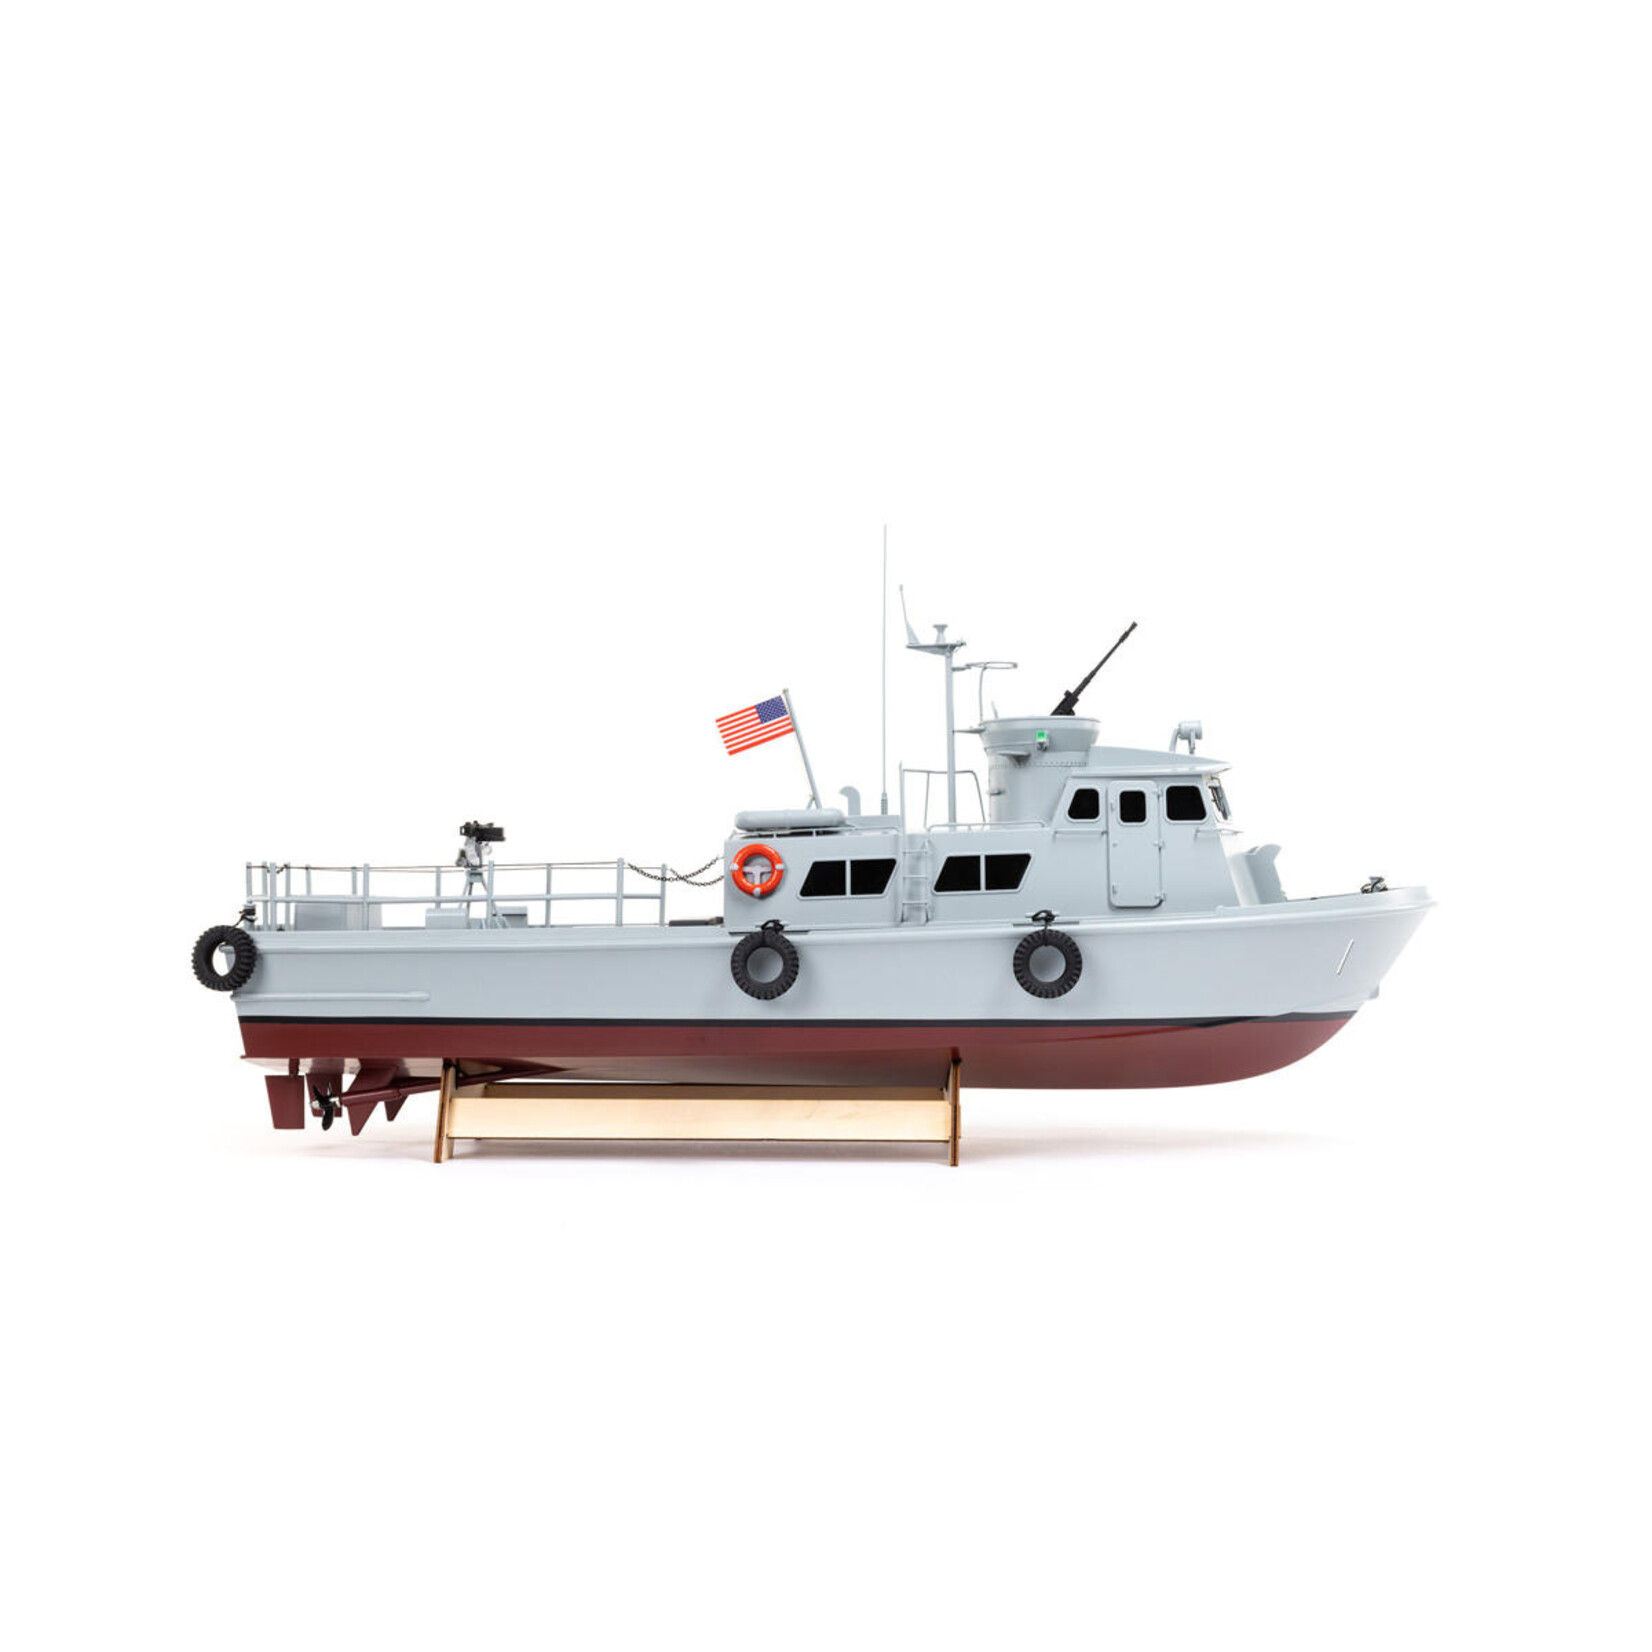 Pro Boat Pro Boat PCF Mark I 24" Swift Patrol Craft RTR Boat w/2.4GHz Radio #PRB08046